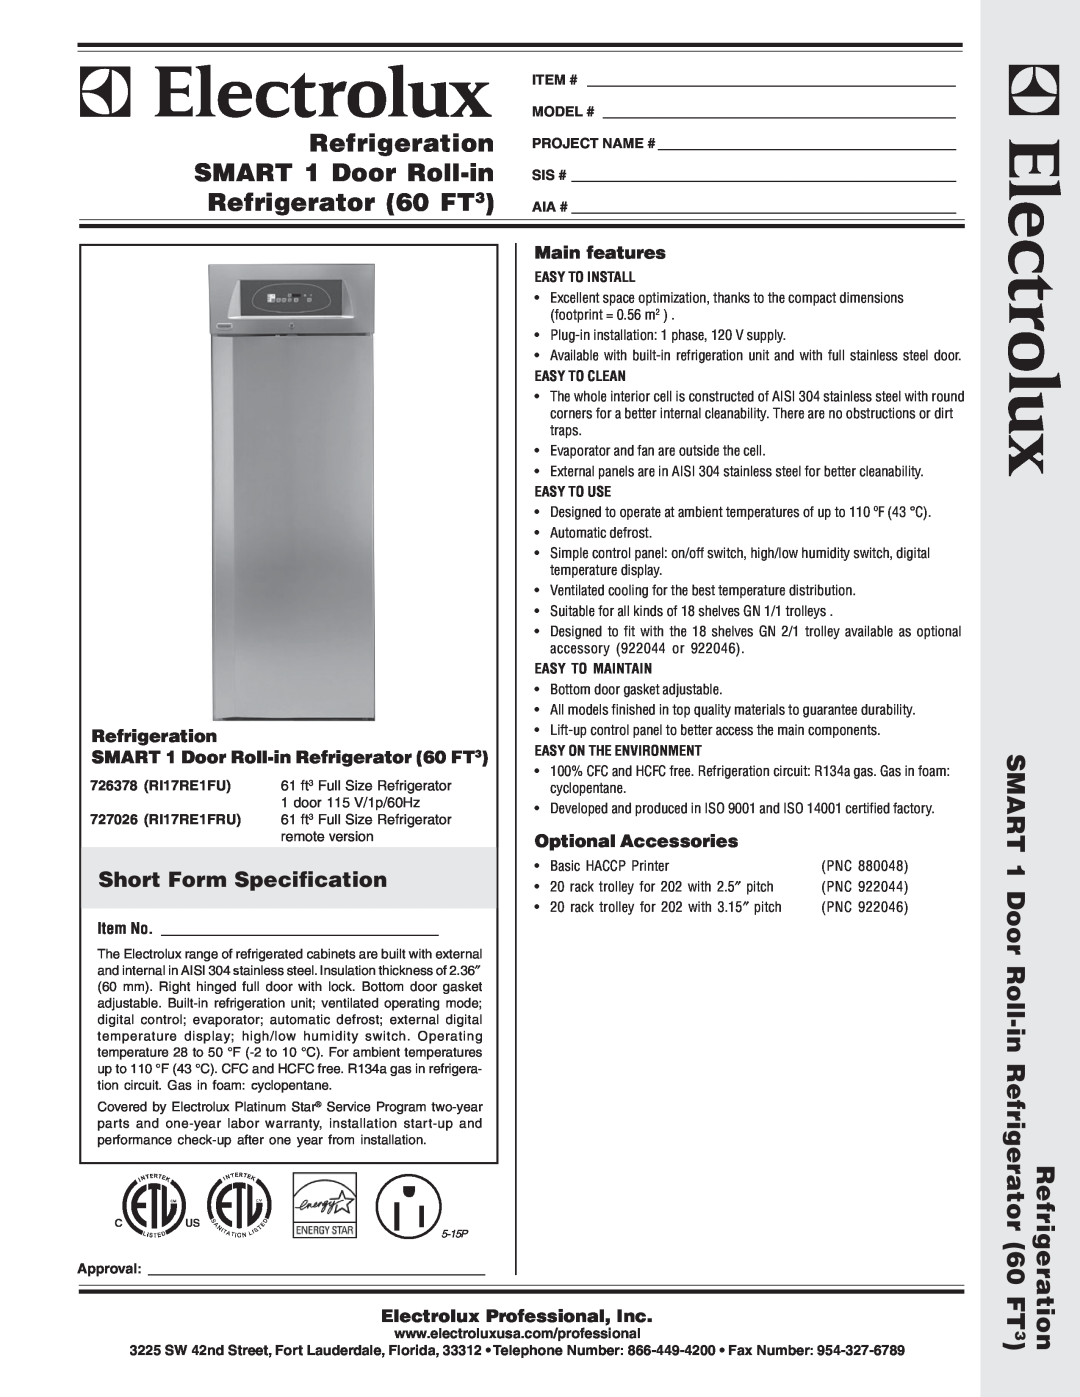 Electrolux 726378 warranty Short Form Specification, Refrigeration SMART 1 Door Roll-in Refrigerator 60 FT3, Main features 